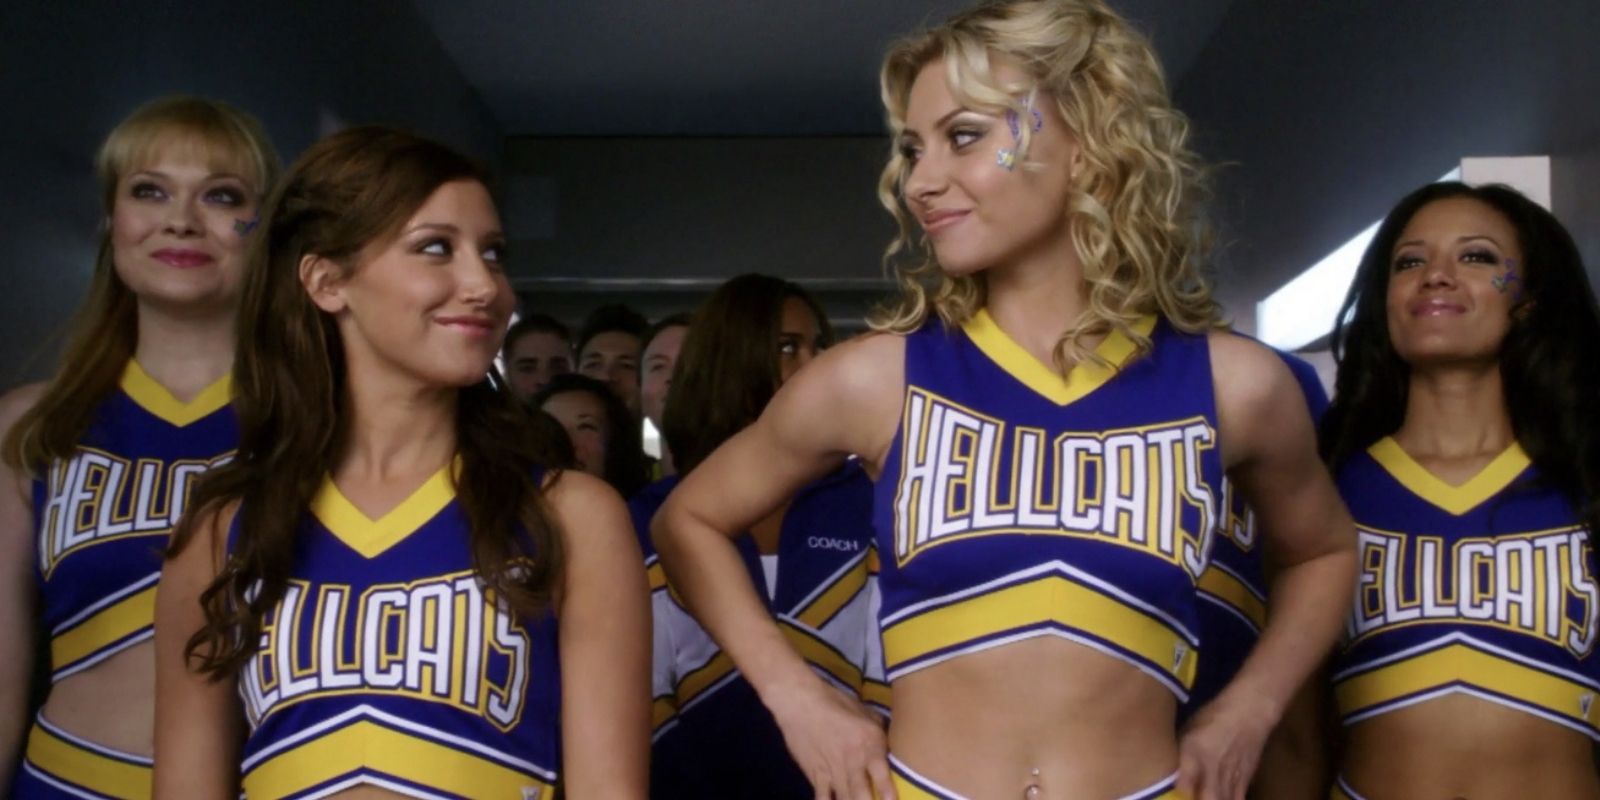 Hellcats cheerleaders in uniform